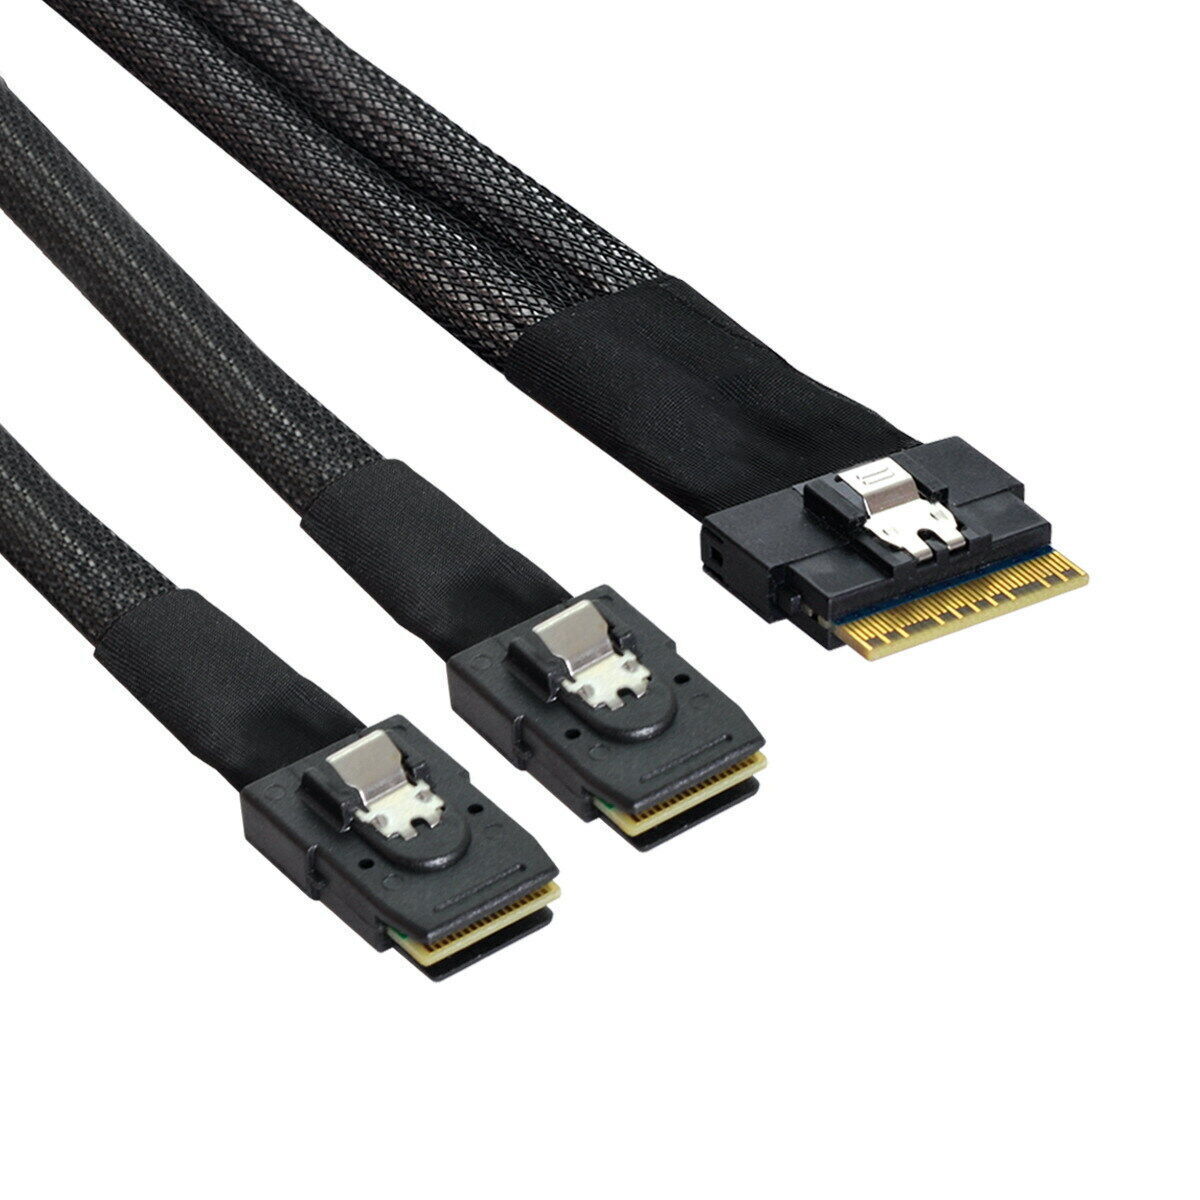 Jimier SFF-8654 8i 74Pin Slimline SAS Slim 4.0 to Dual SFF-8087 Mini SAS Cable